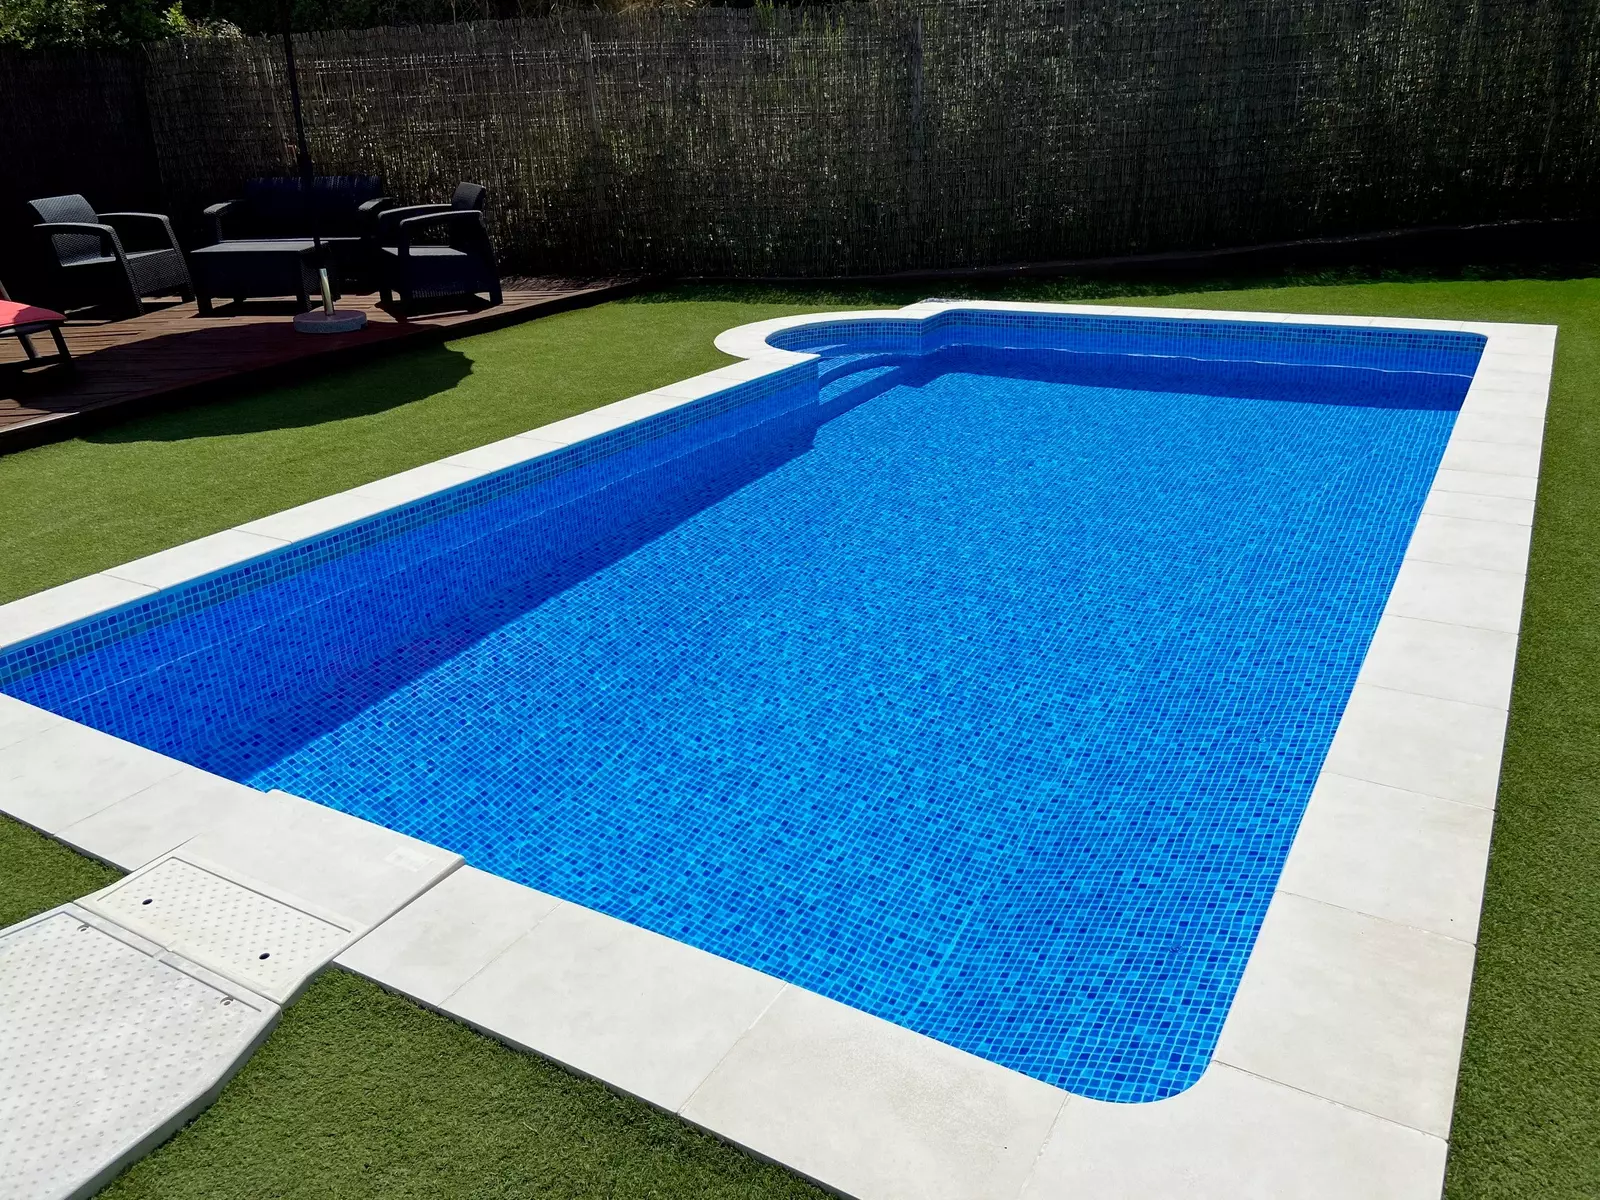 Bazénová fólia Sopremapool Design - Marbella Blue Mosaic 1,5mm